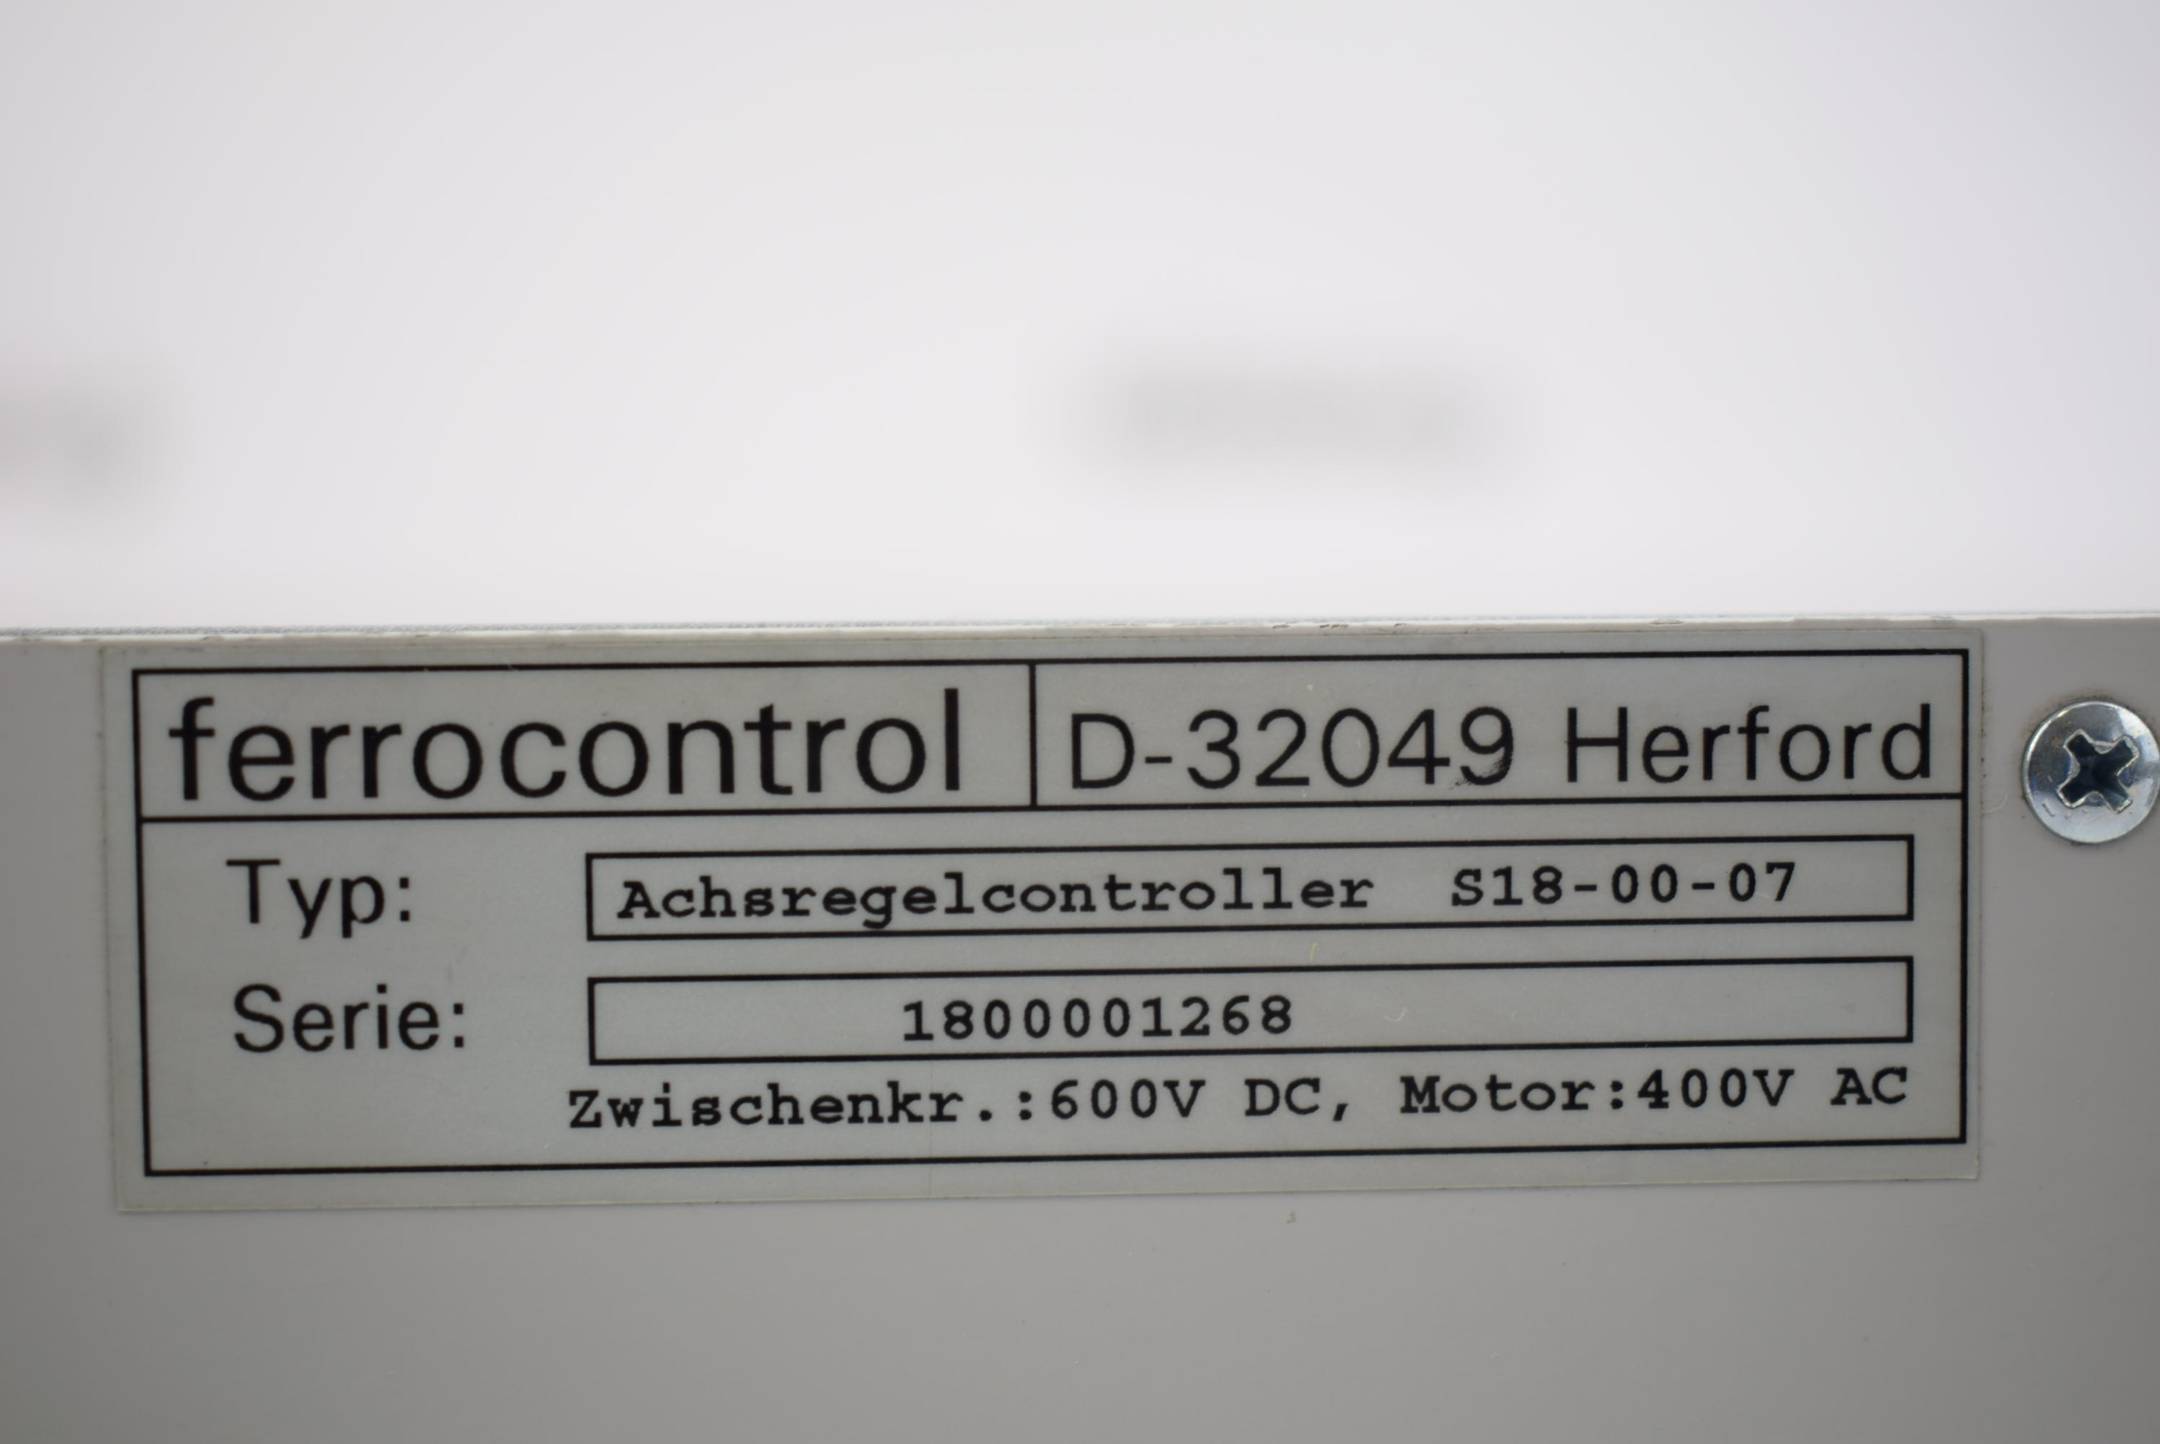 Ferrocontrol Achsregelcontroller S18-00-07